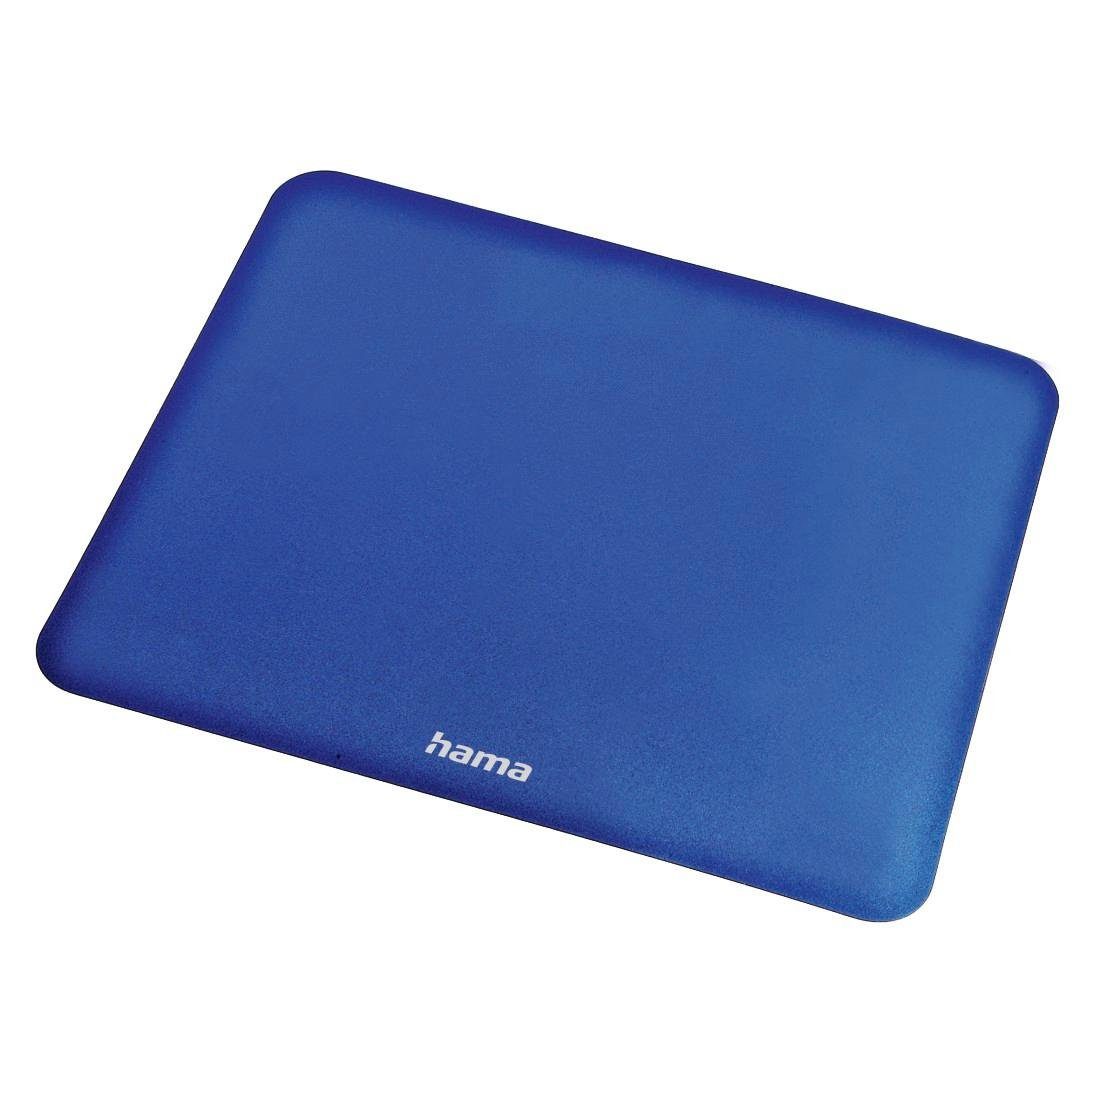 Hama Mauspad Mauspad besonders geeignet für Lasermäuse Mousepad, blau extra flach